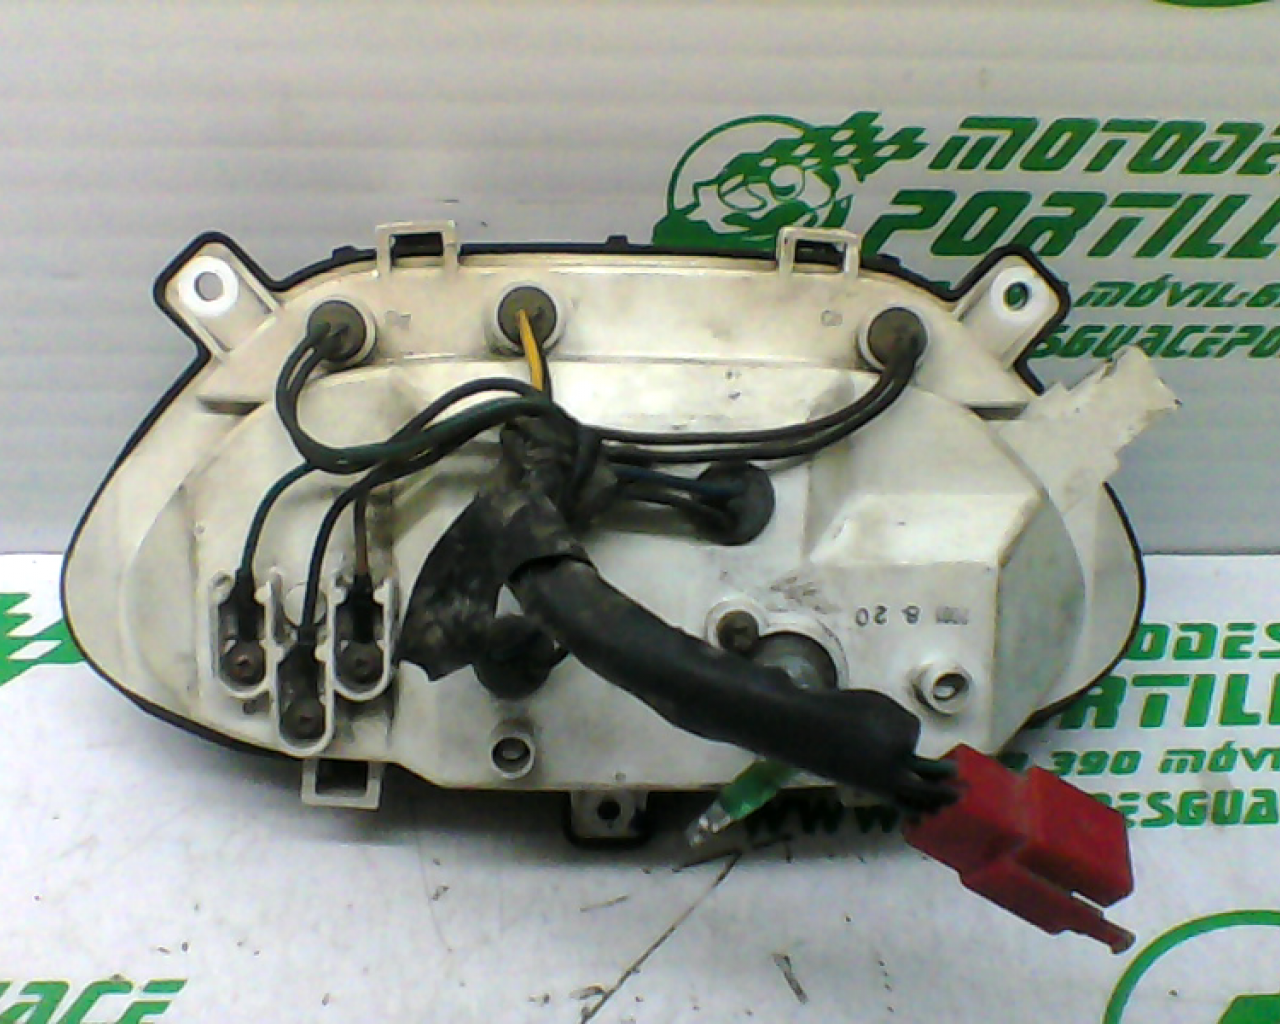 Cuentakilómetros Yamaha Cygnus flame 125 (1997-1999)